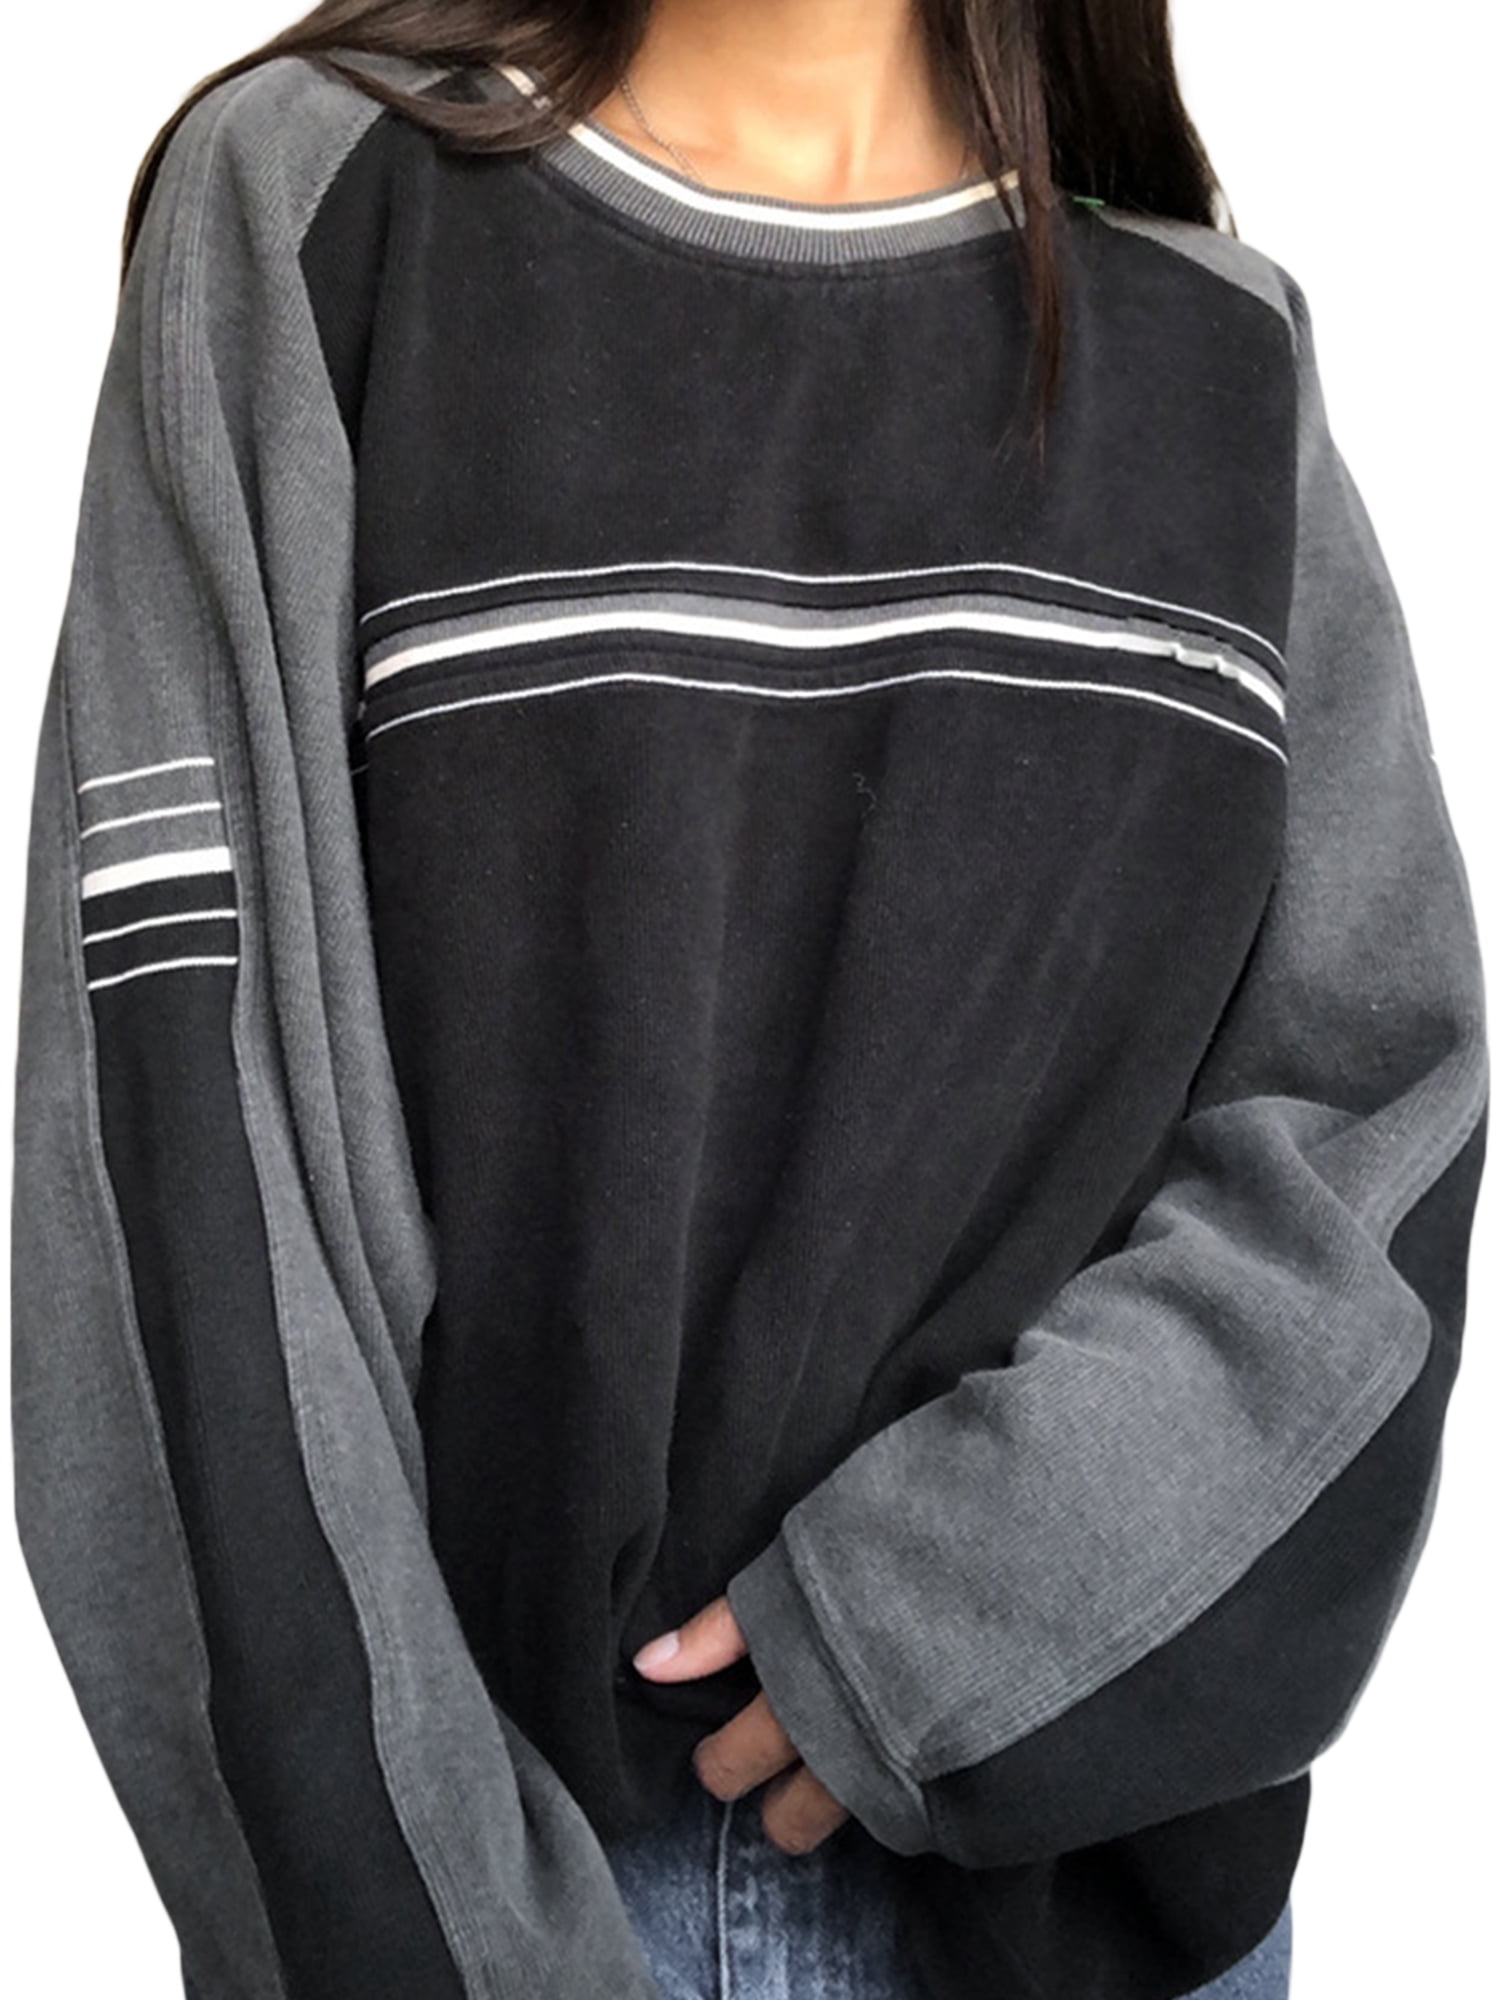 Pullover Sweatshirts for Women Crewneck Oversized Vintage Graphic Long Sleeve Loose Sweatshirt Sweaters Tops Shirts